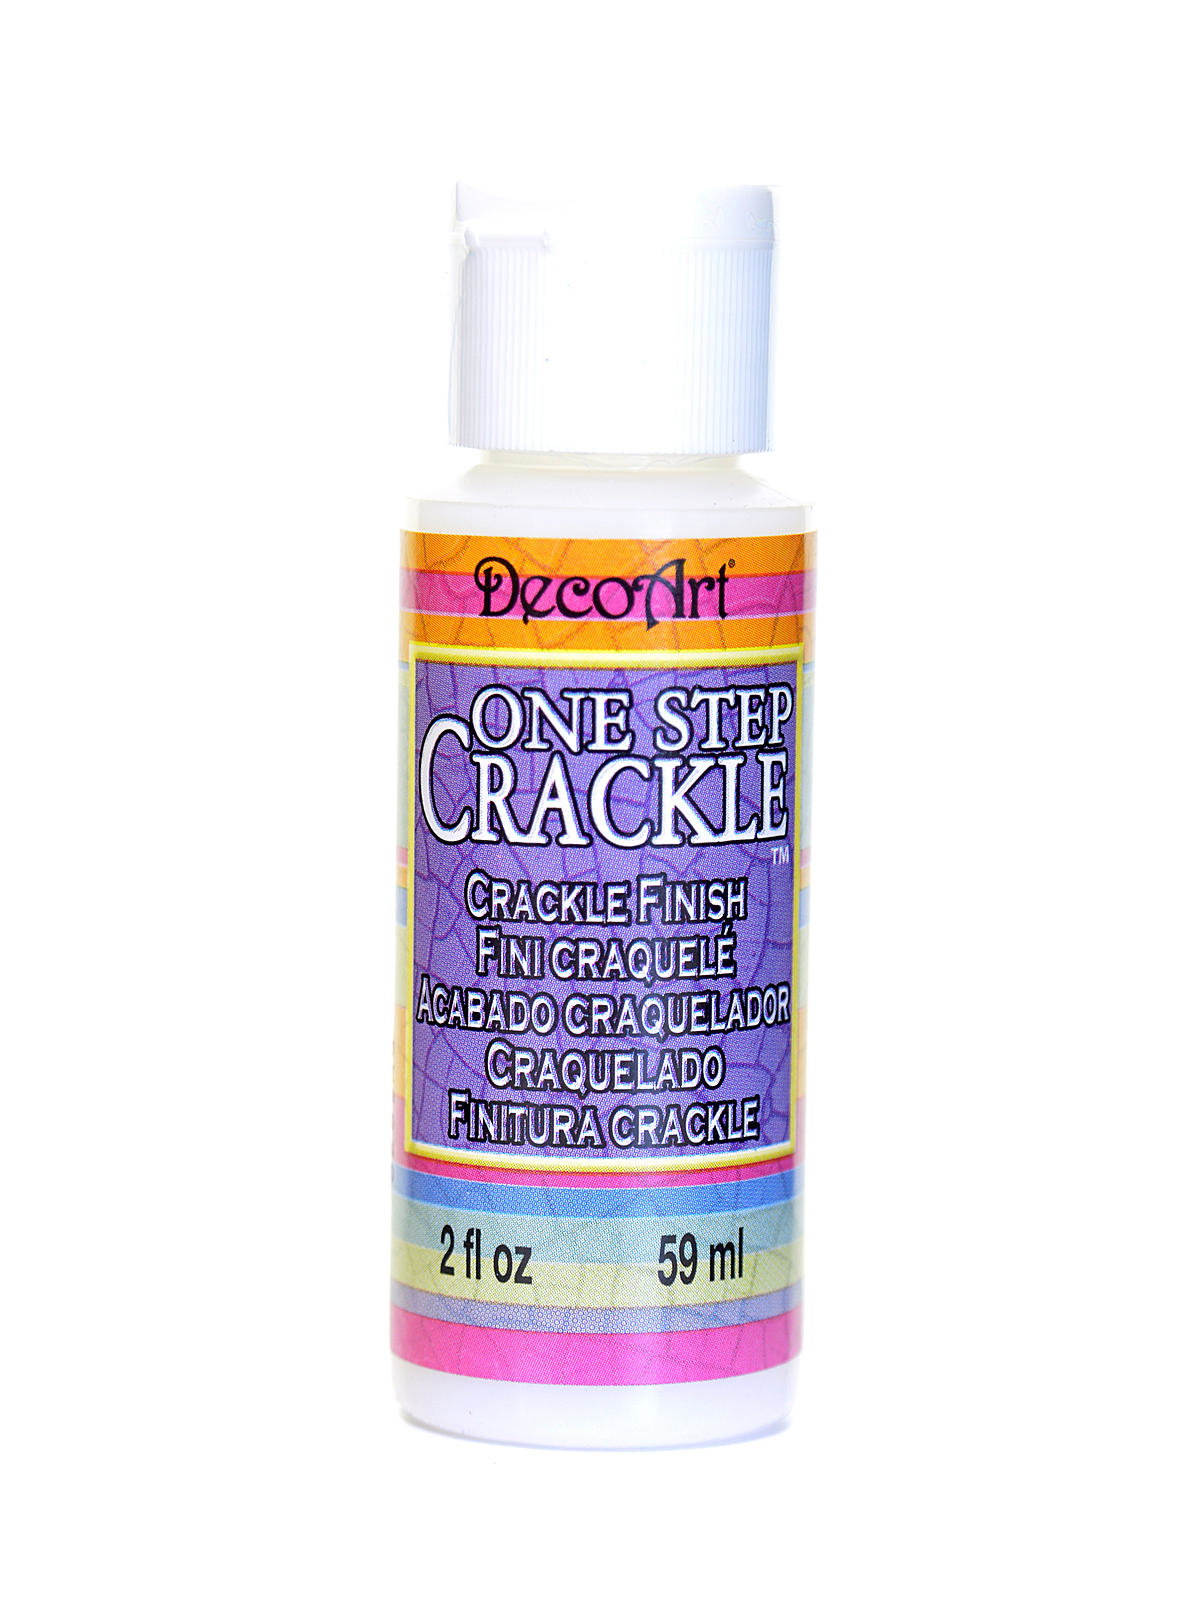 DecoArt One-Step Crackle Medium, 2 oz.